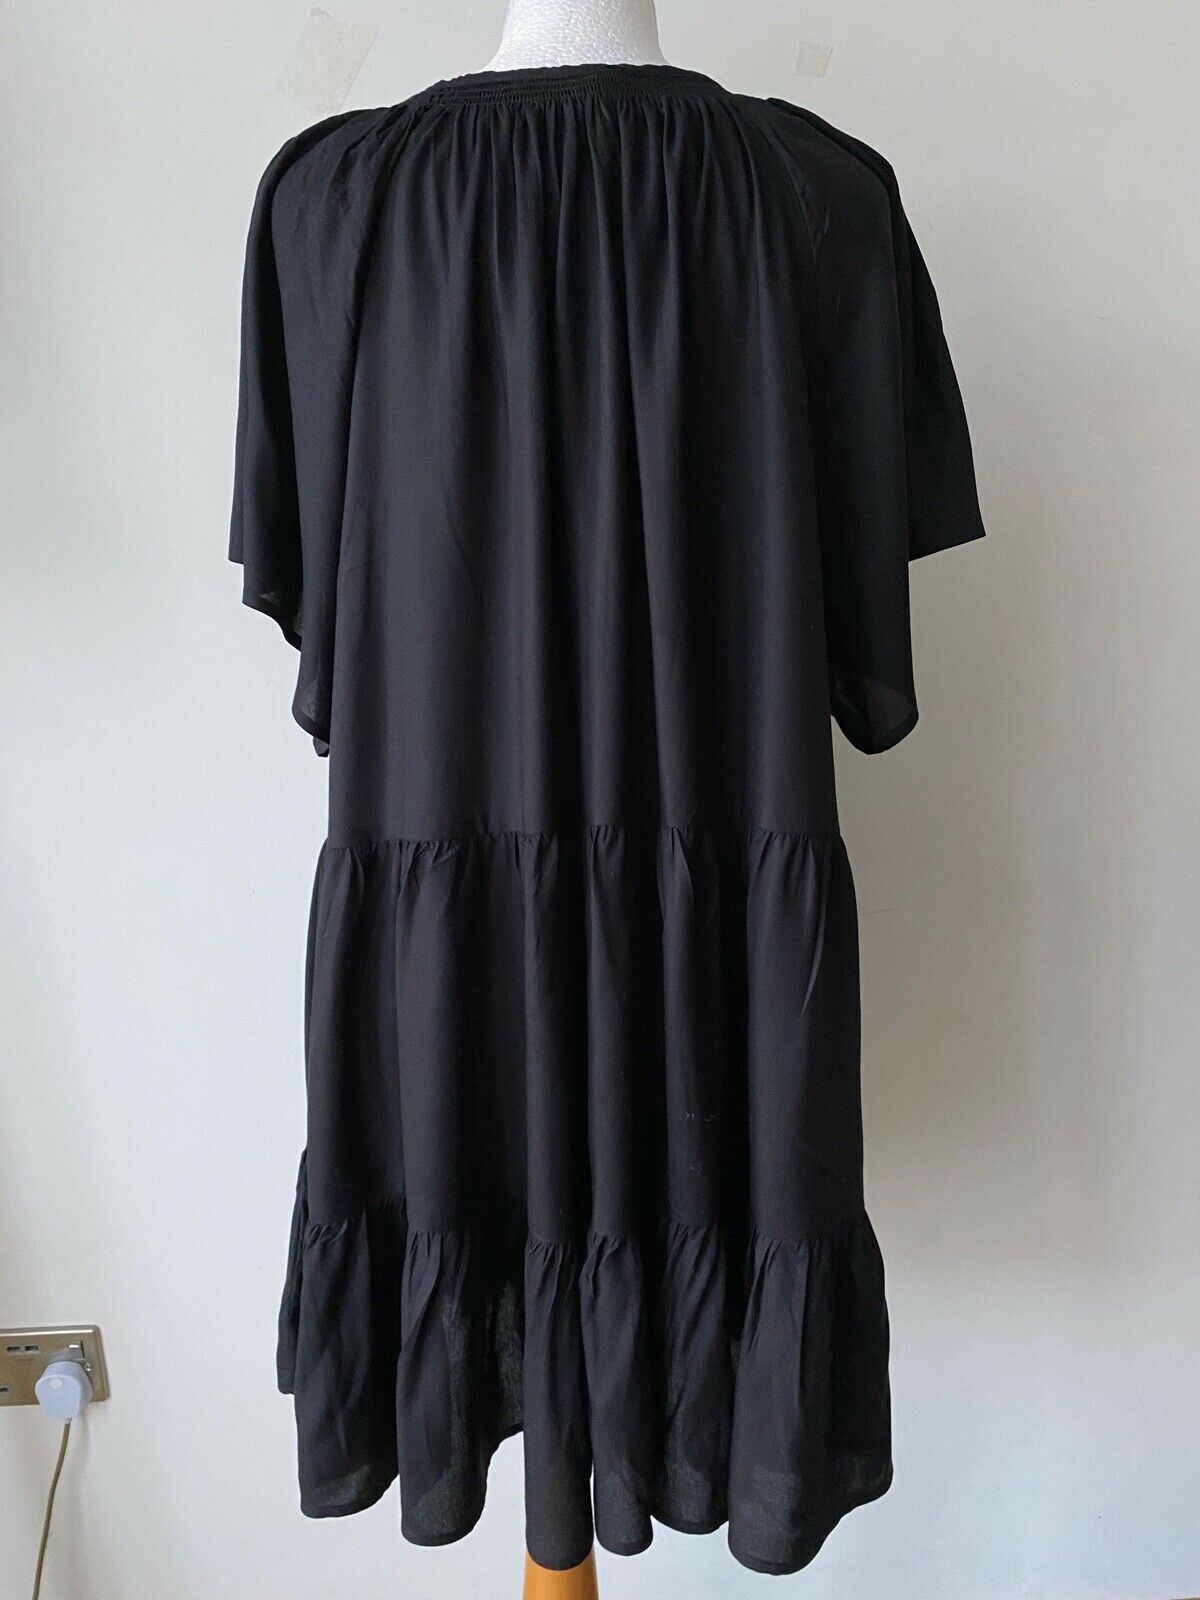 VERY Black Smock Tiered Dress Size 10